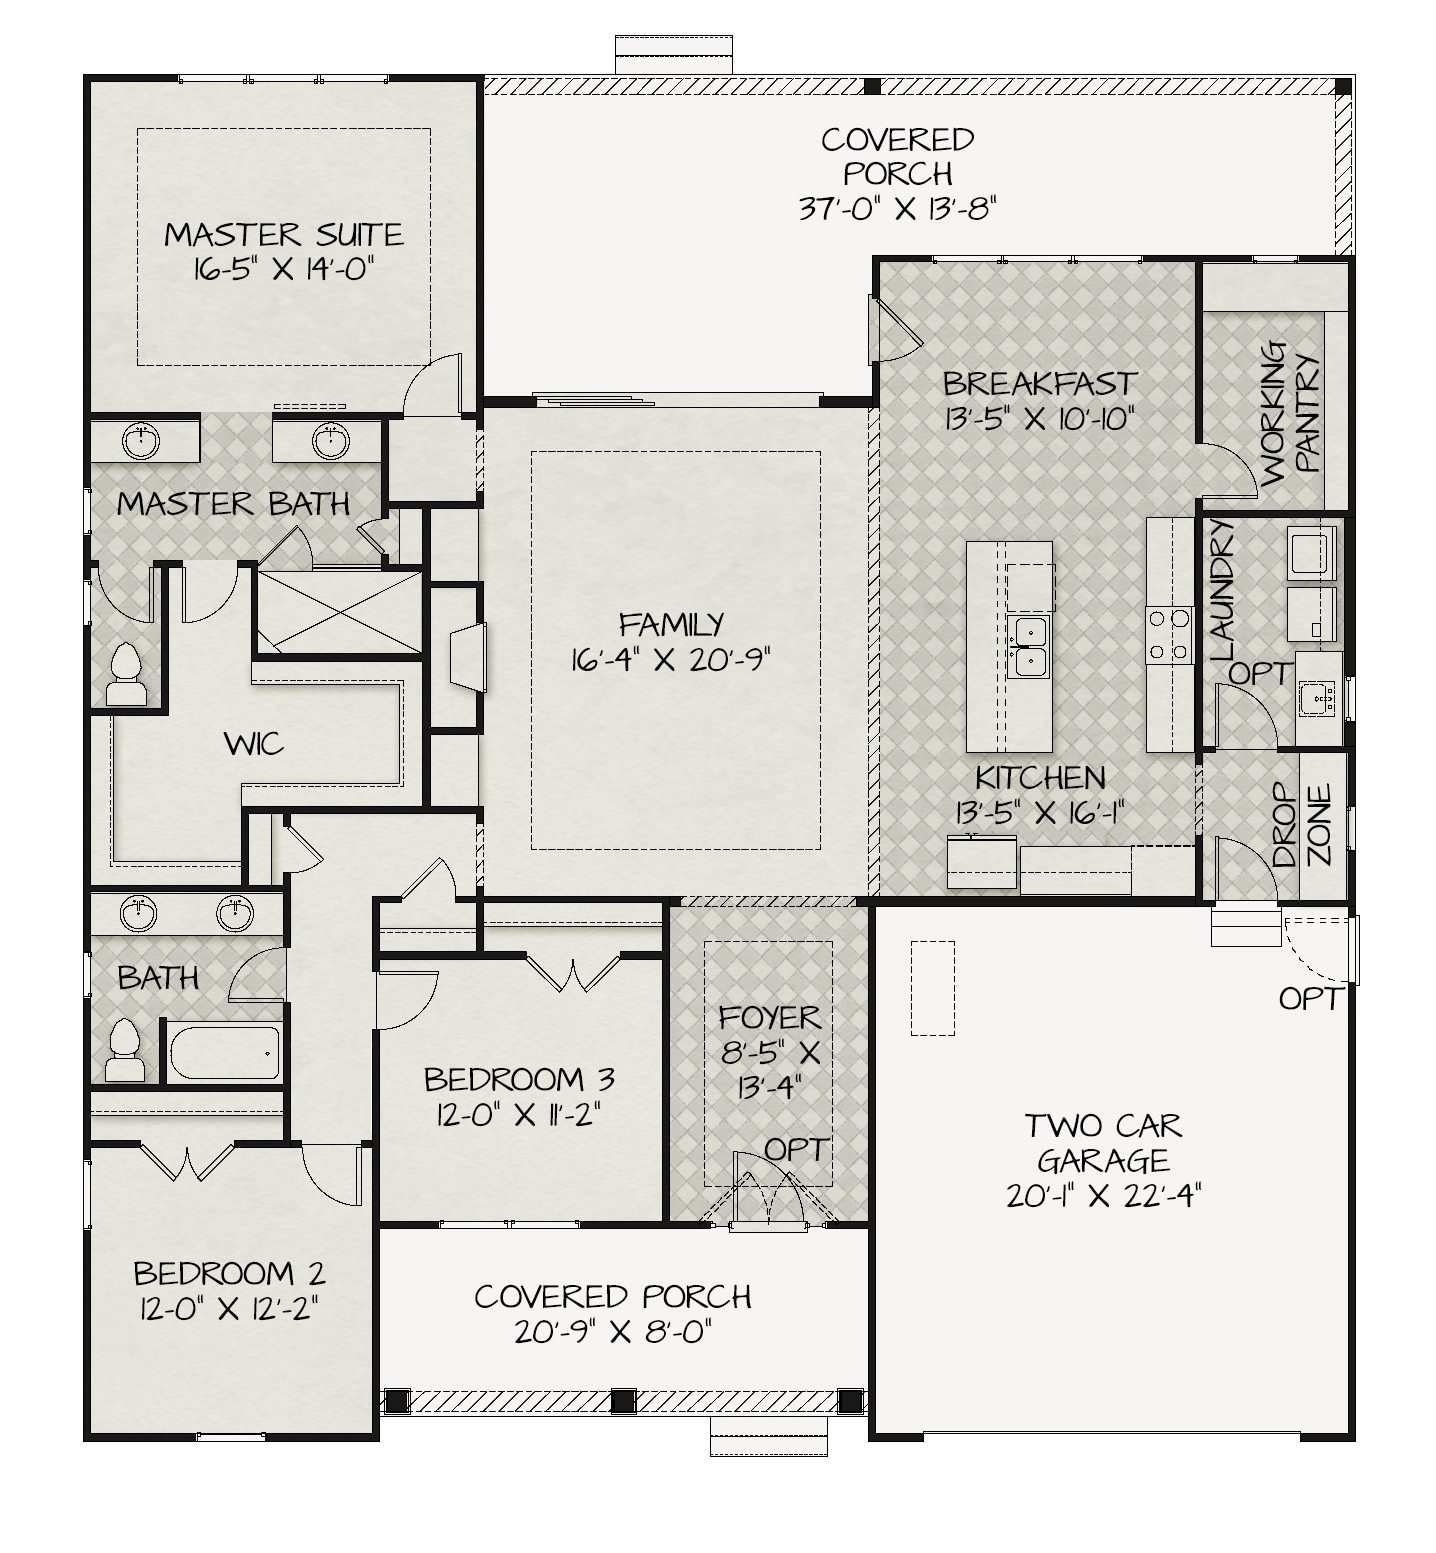 The Otter floor plan image